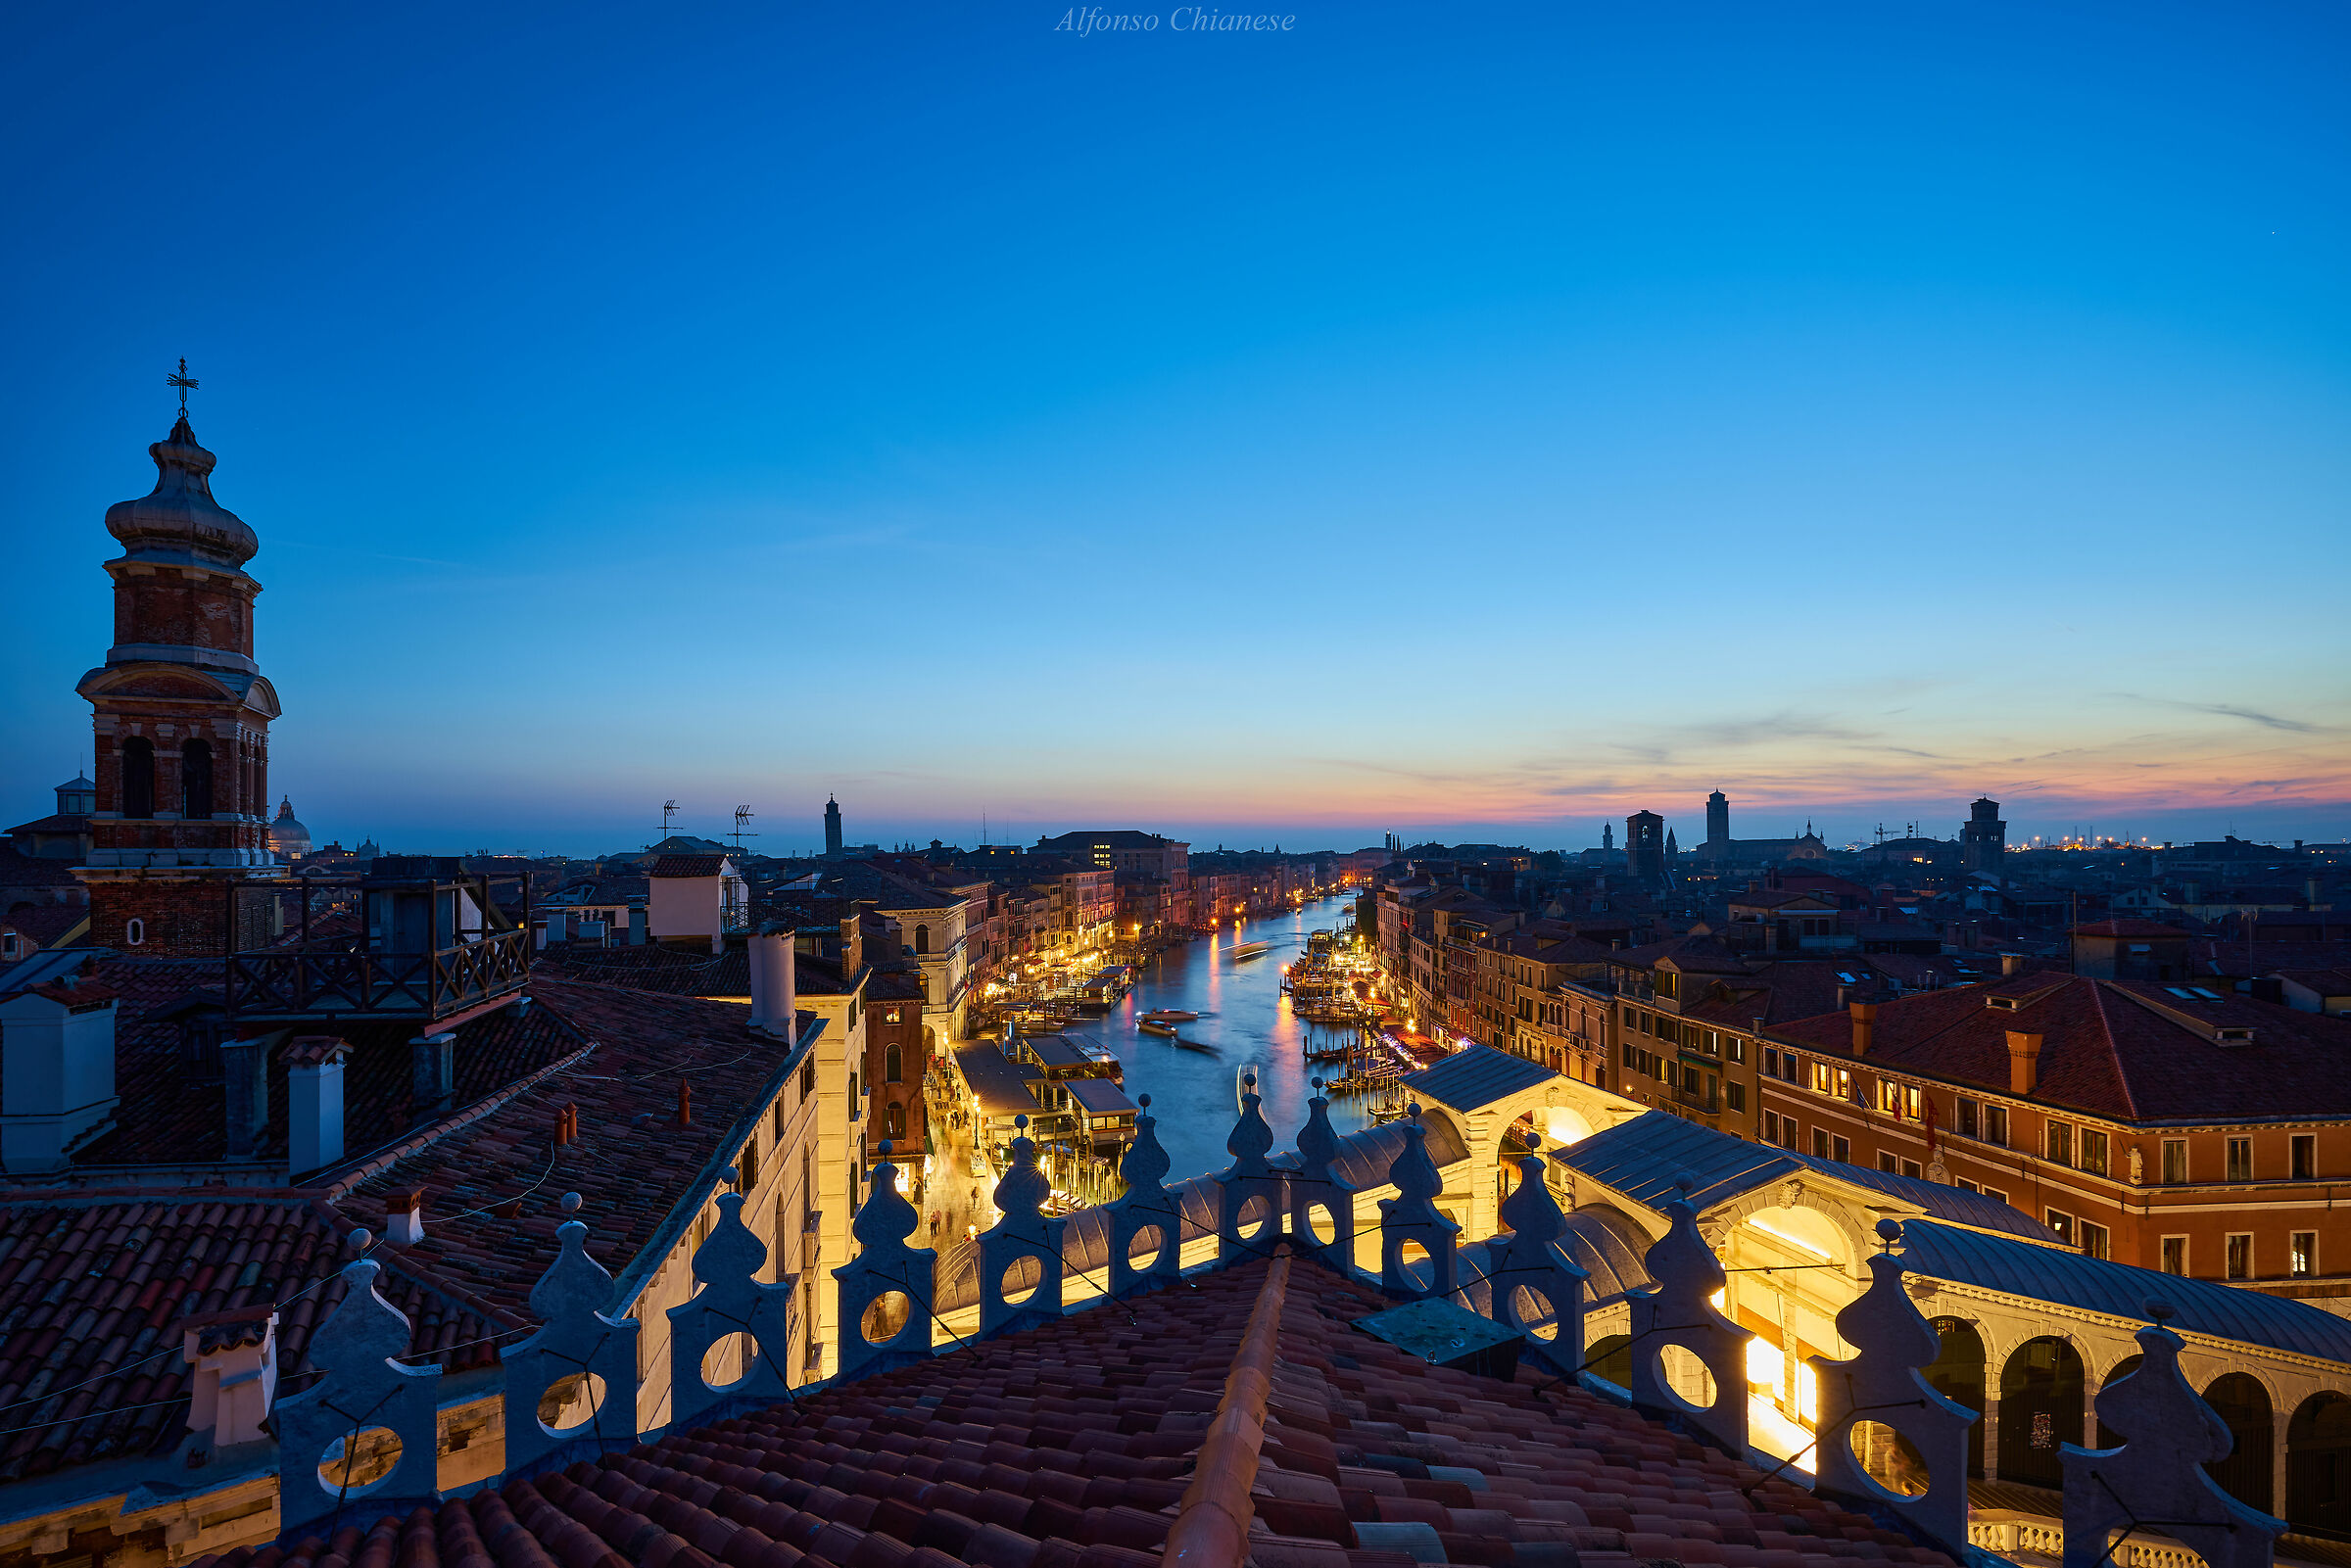 Venetian roofs...